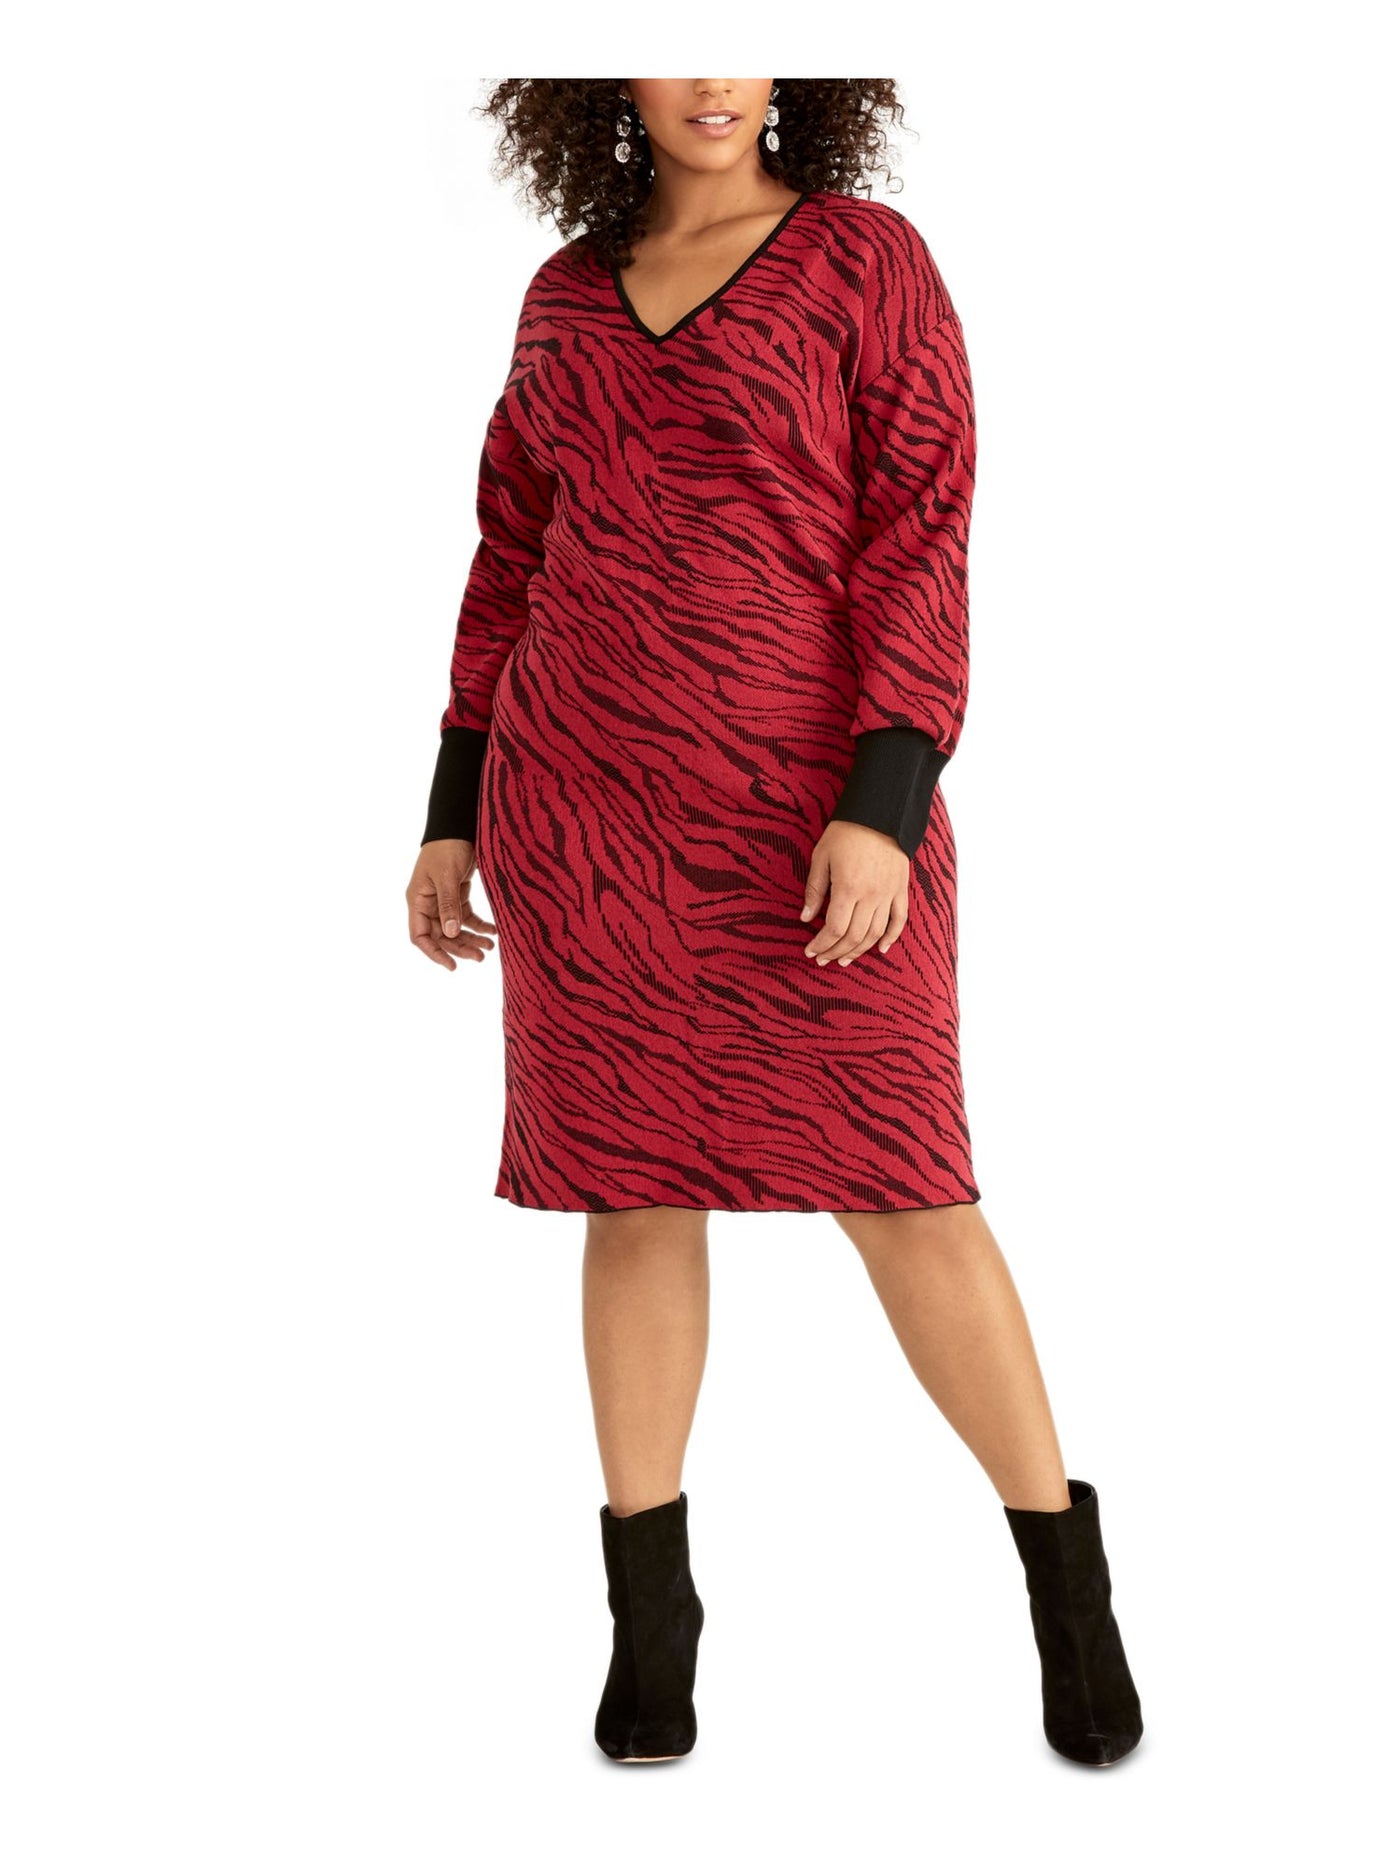 RACHEL RACHEL ROY Womens Red Patterned Long Sleeve V Neck Below The Knee Fit + Flare Dress Plus 2X